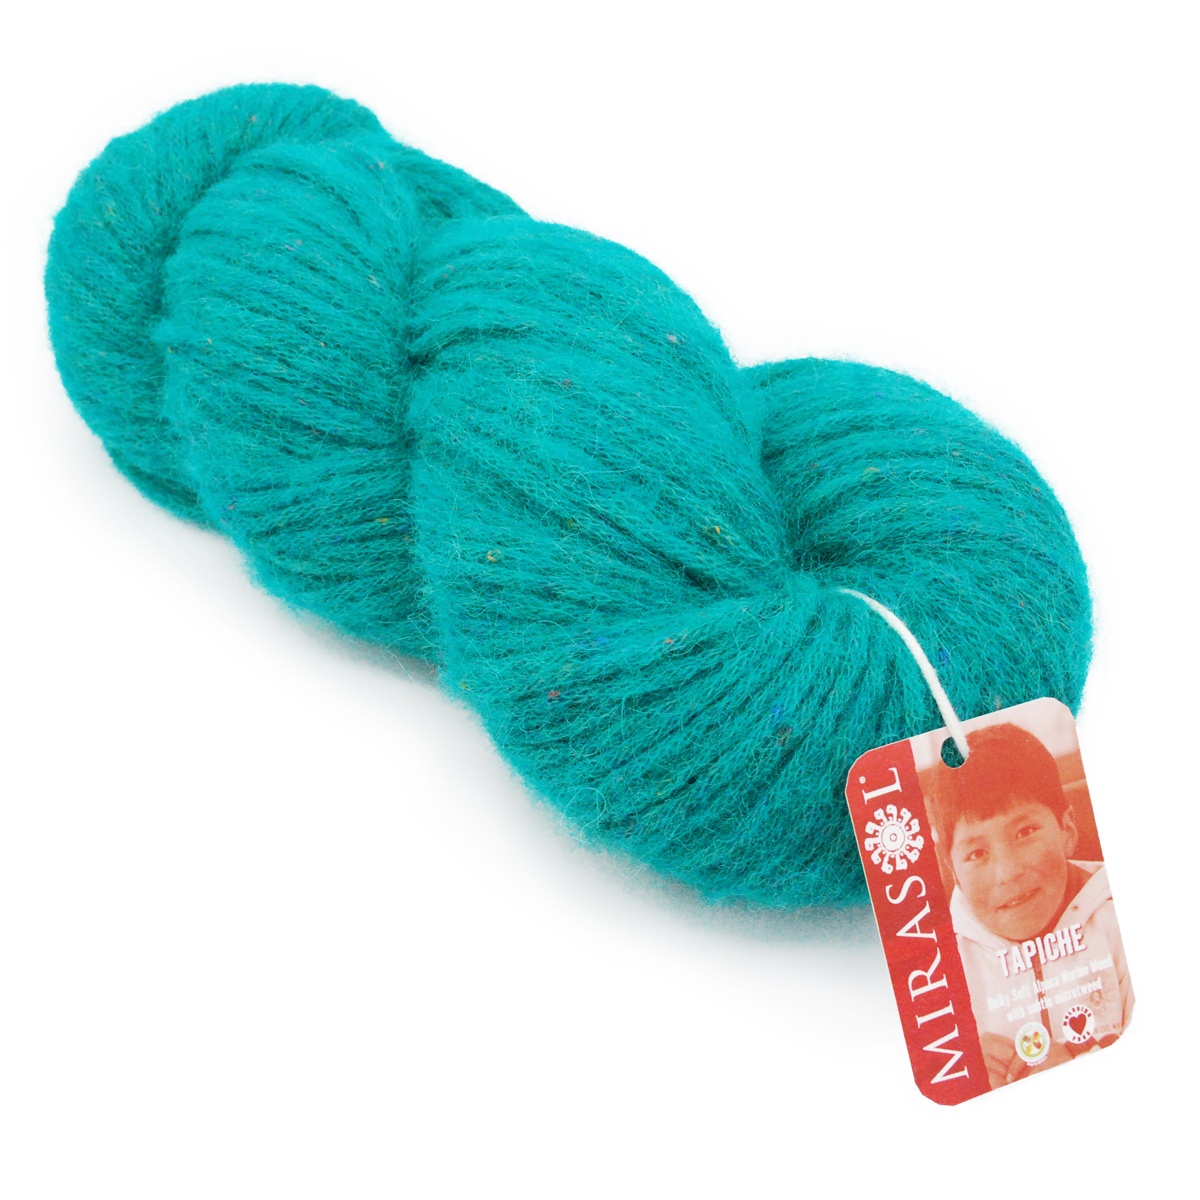 Photo of 'Tapiche' yarn